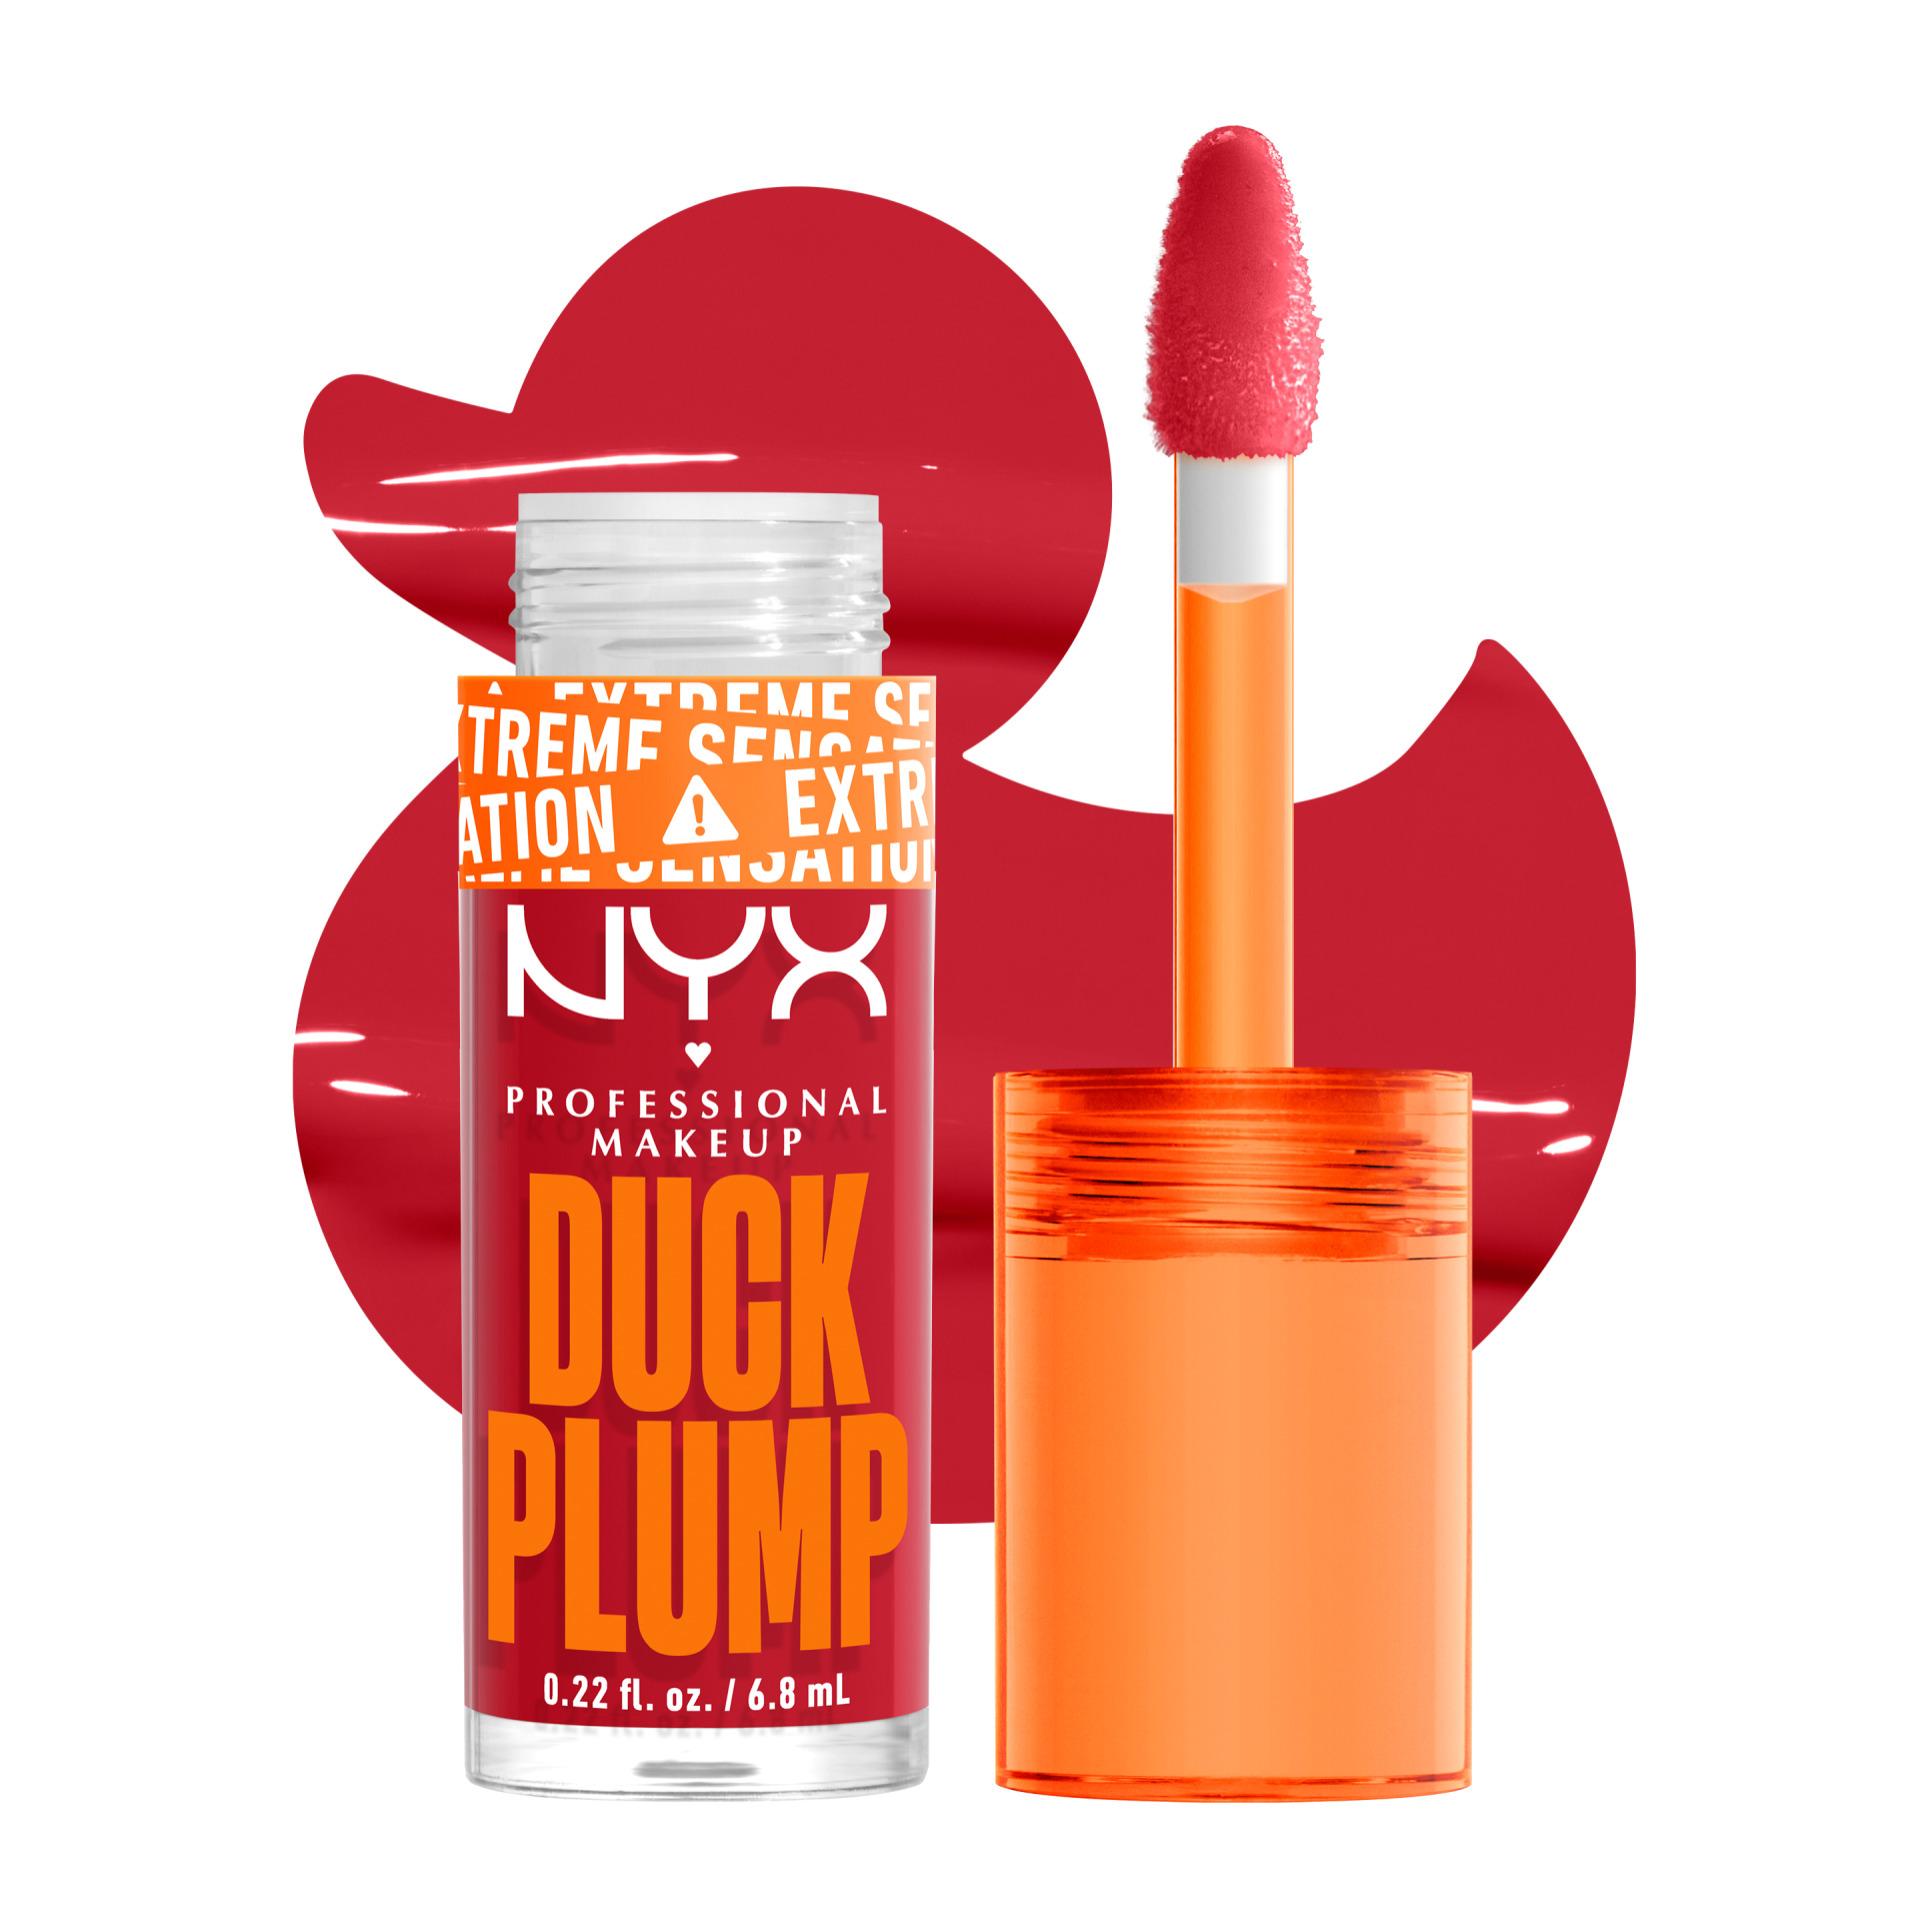 image-Duck Plump Cherry Spice